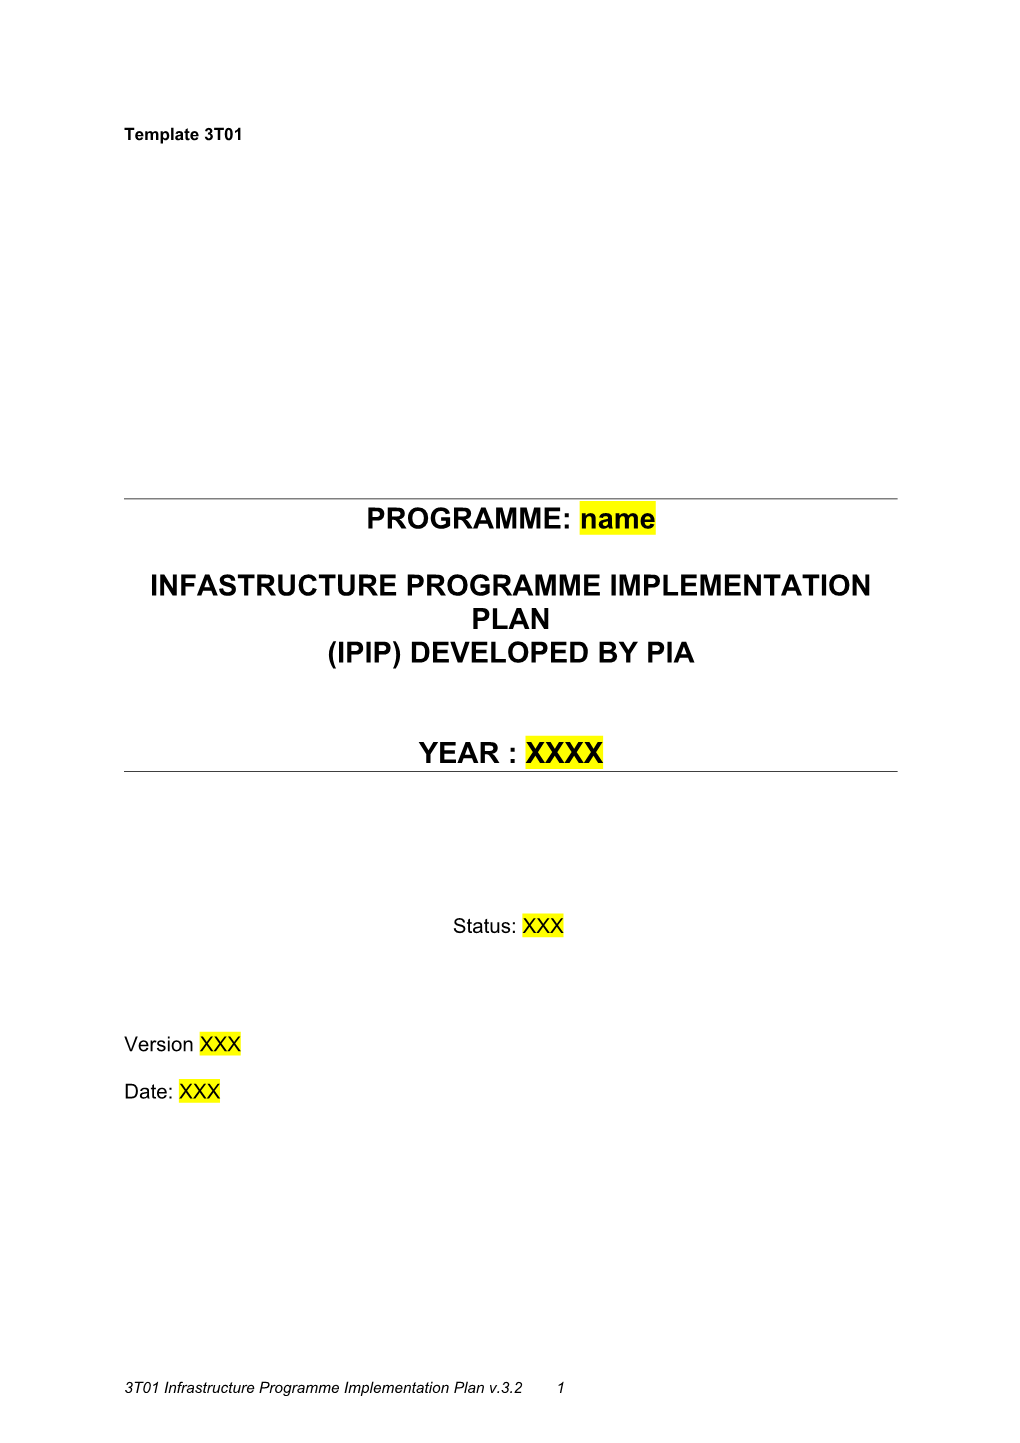 Infastructure Programme Implementation Plan